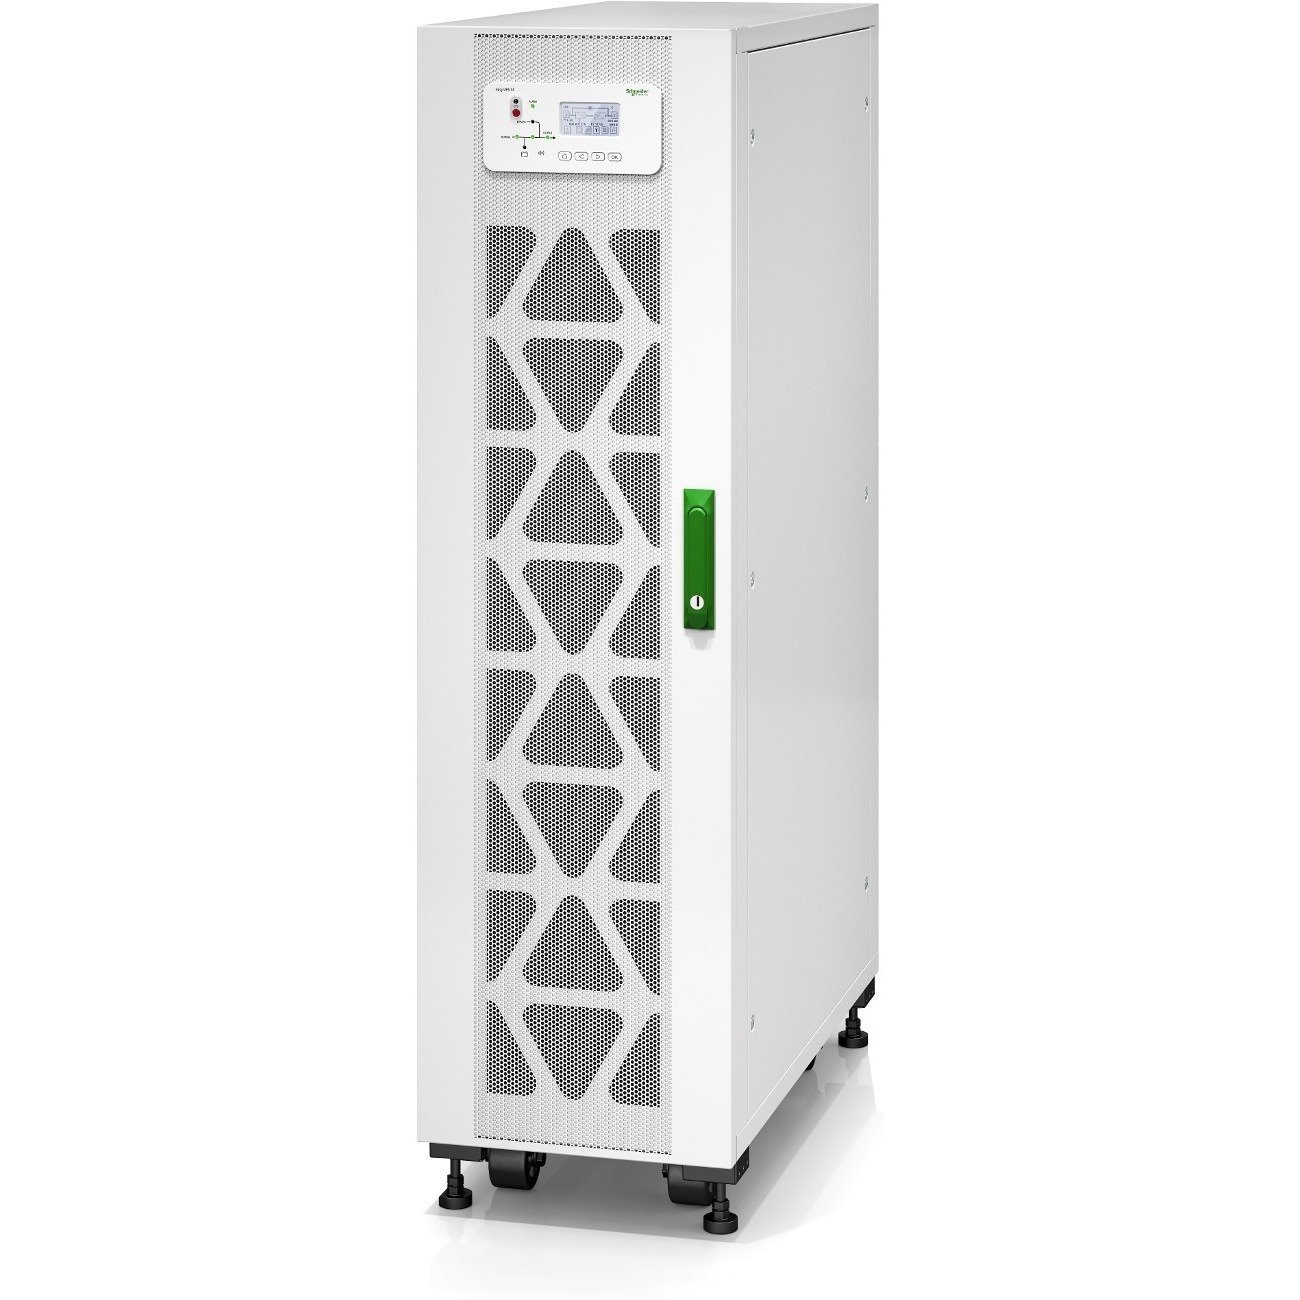 Schneider Electric Easy UPS 3S 15 kVA 400 V 3:3 UPS for Internal Batteries